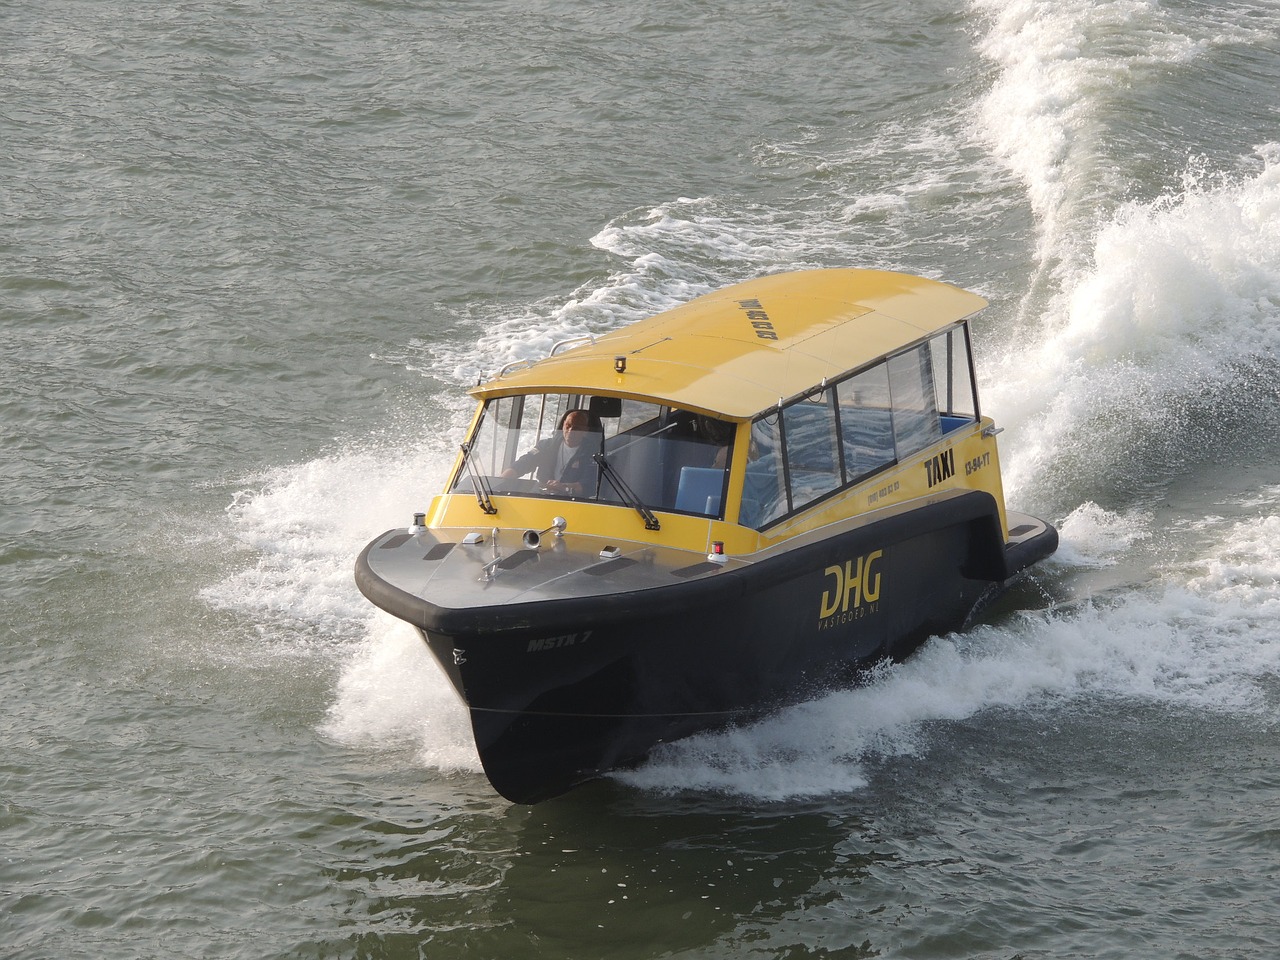 rotterdam boat taxi free photo